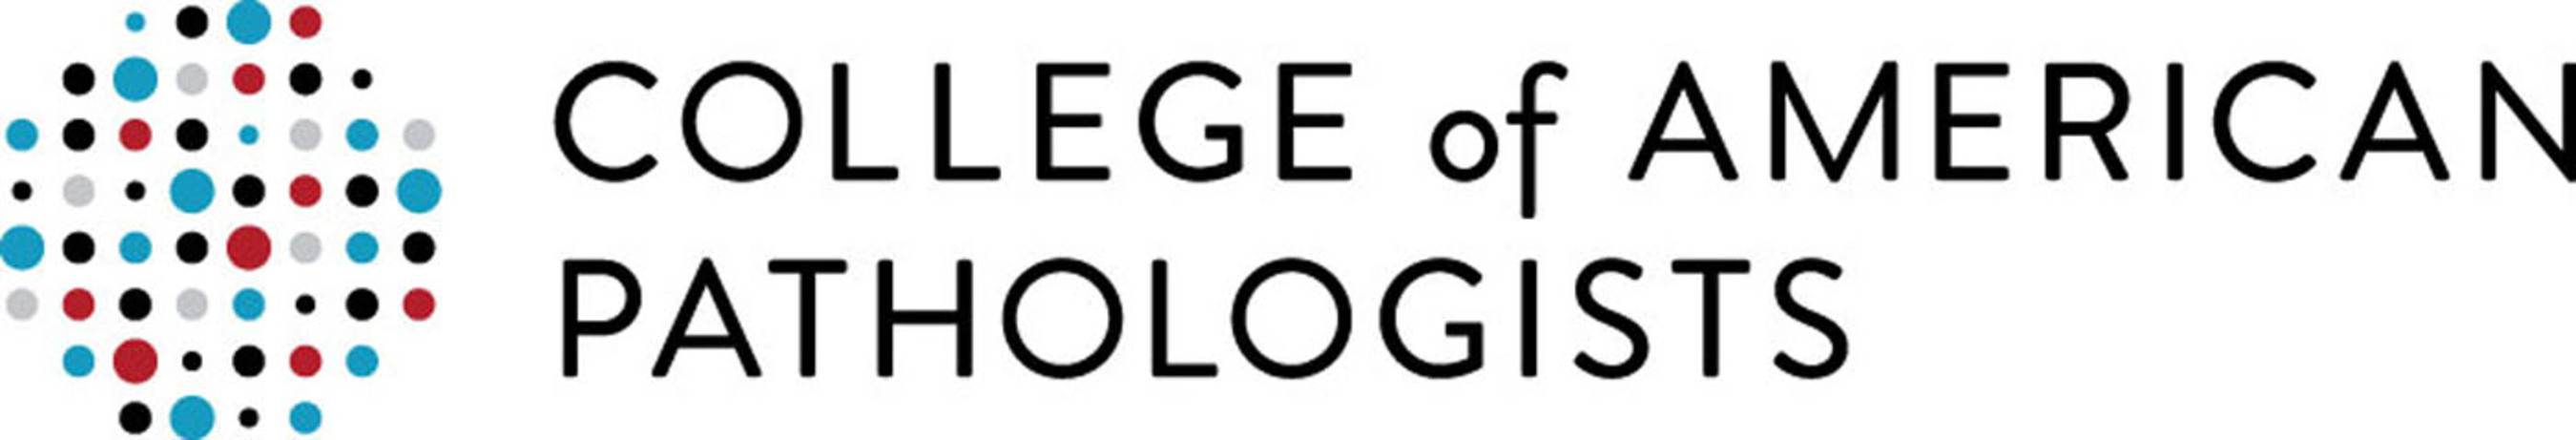 College of American Pathologists. (PRNewsFoto/College of American Pathologists) (PRNewsFoto/)